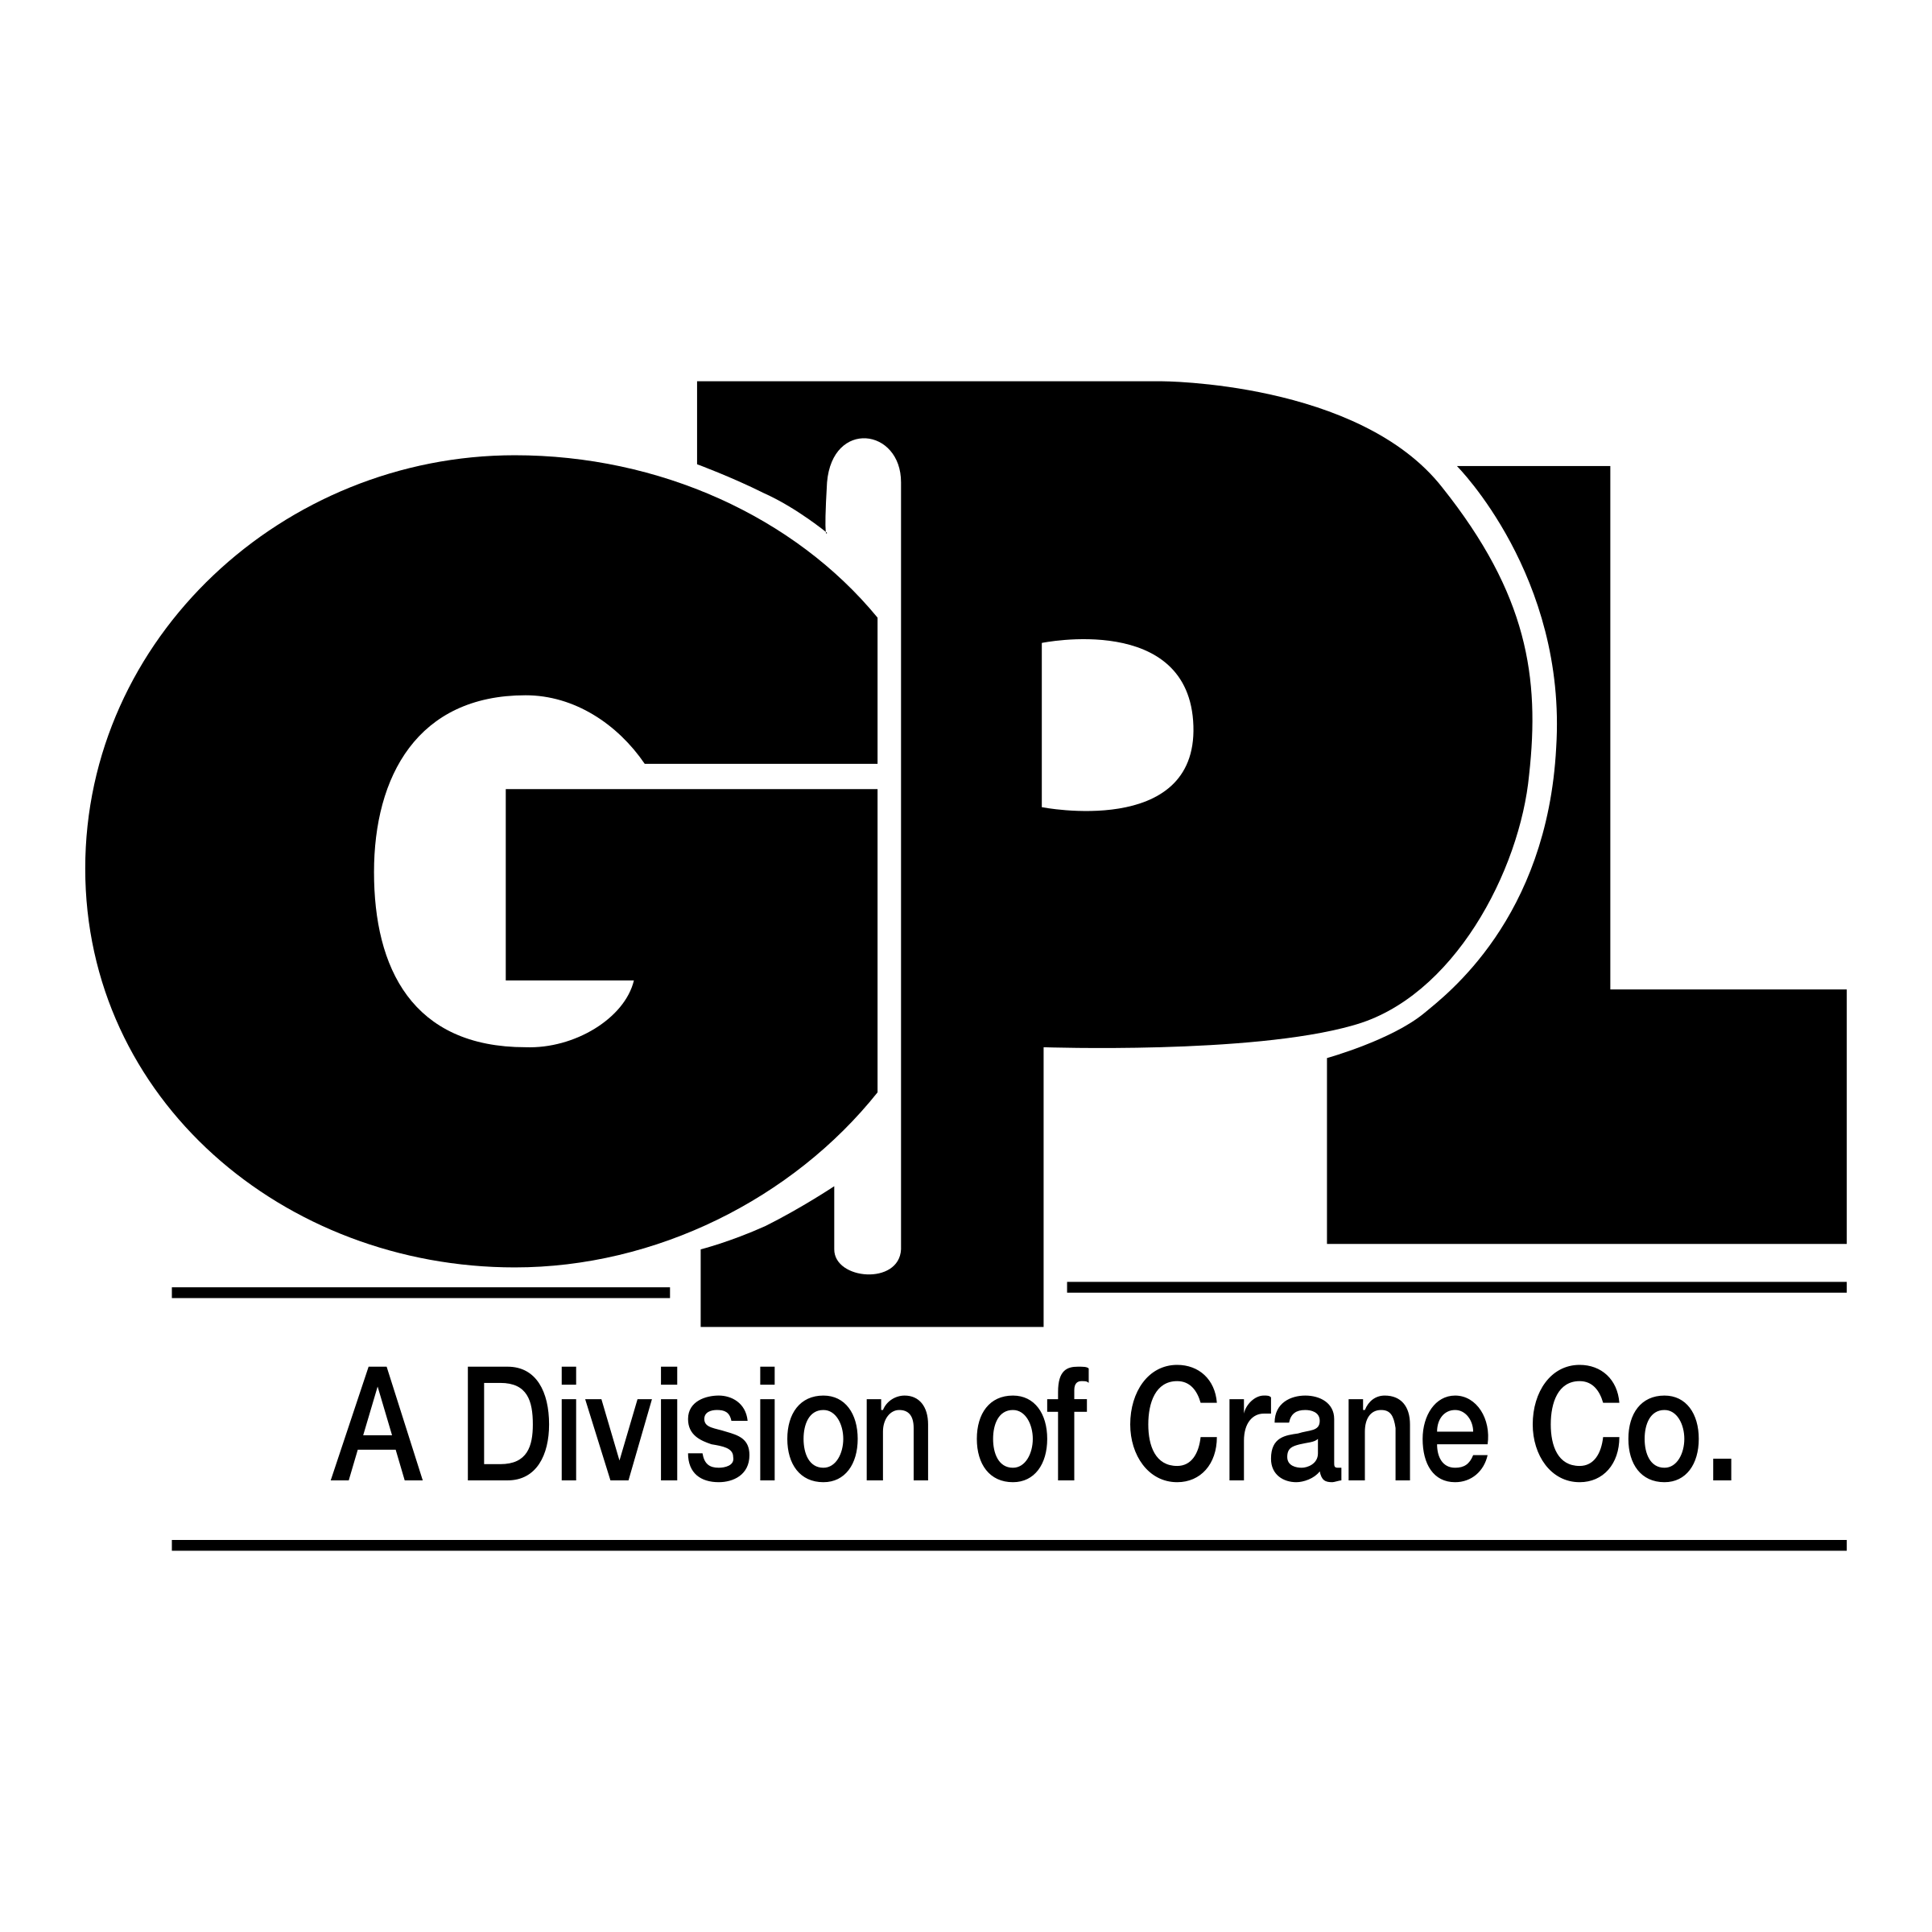 GPL Logo - GPL Logo PNG Transparent & SVG Vector - Freebie Supply